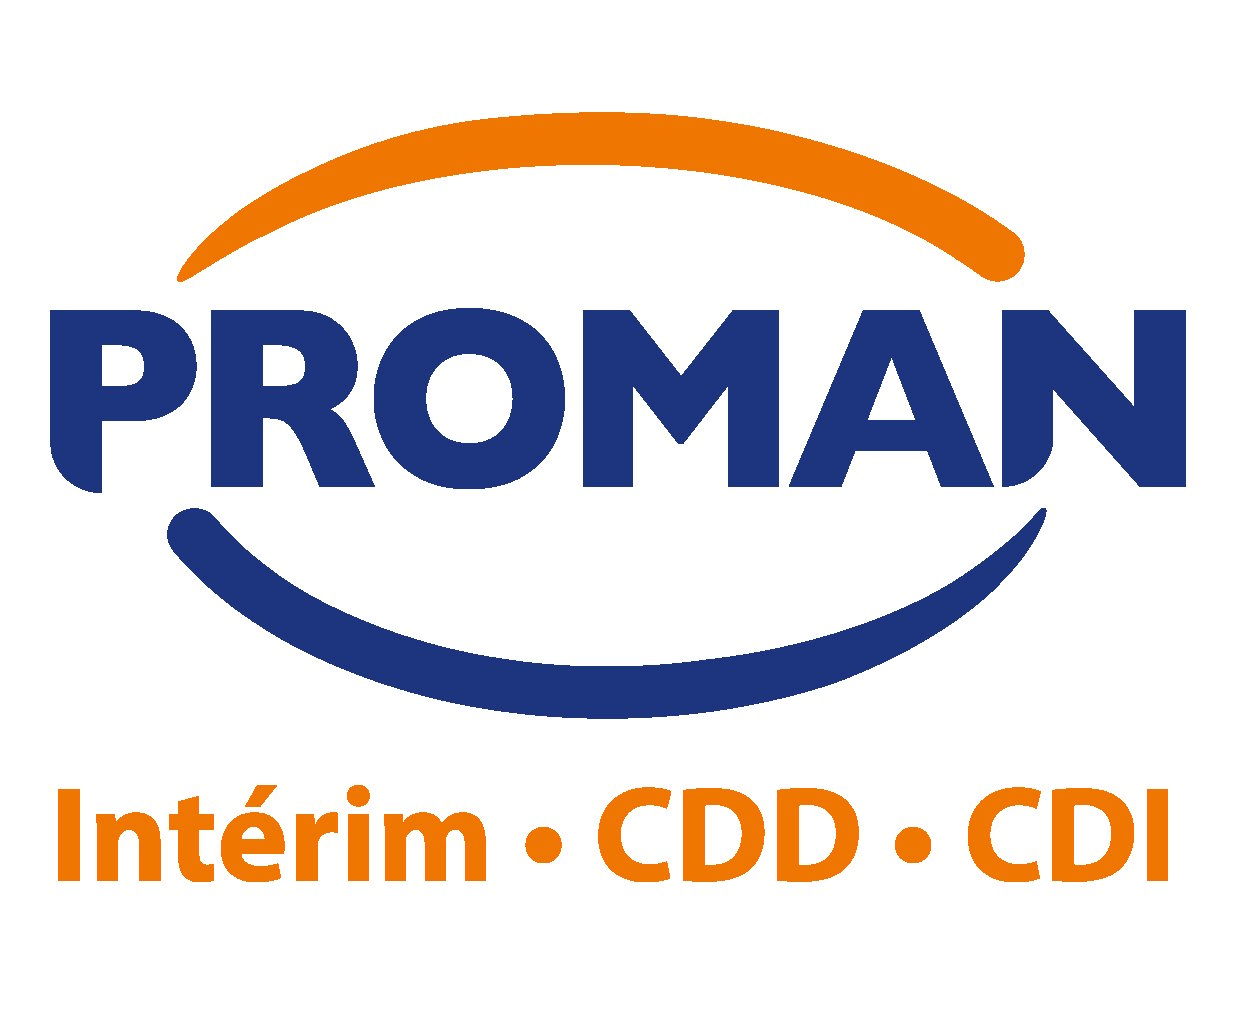 PROMAN_InteÌ_rim_CDD_CDI_carré-1